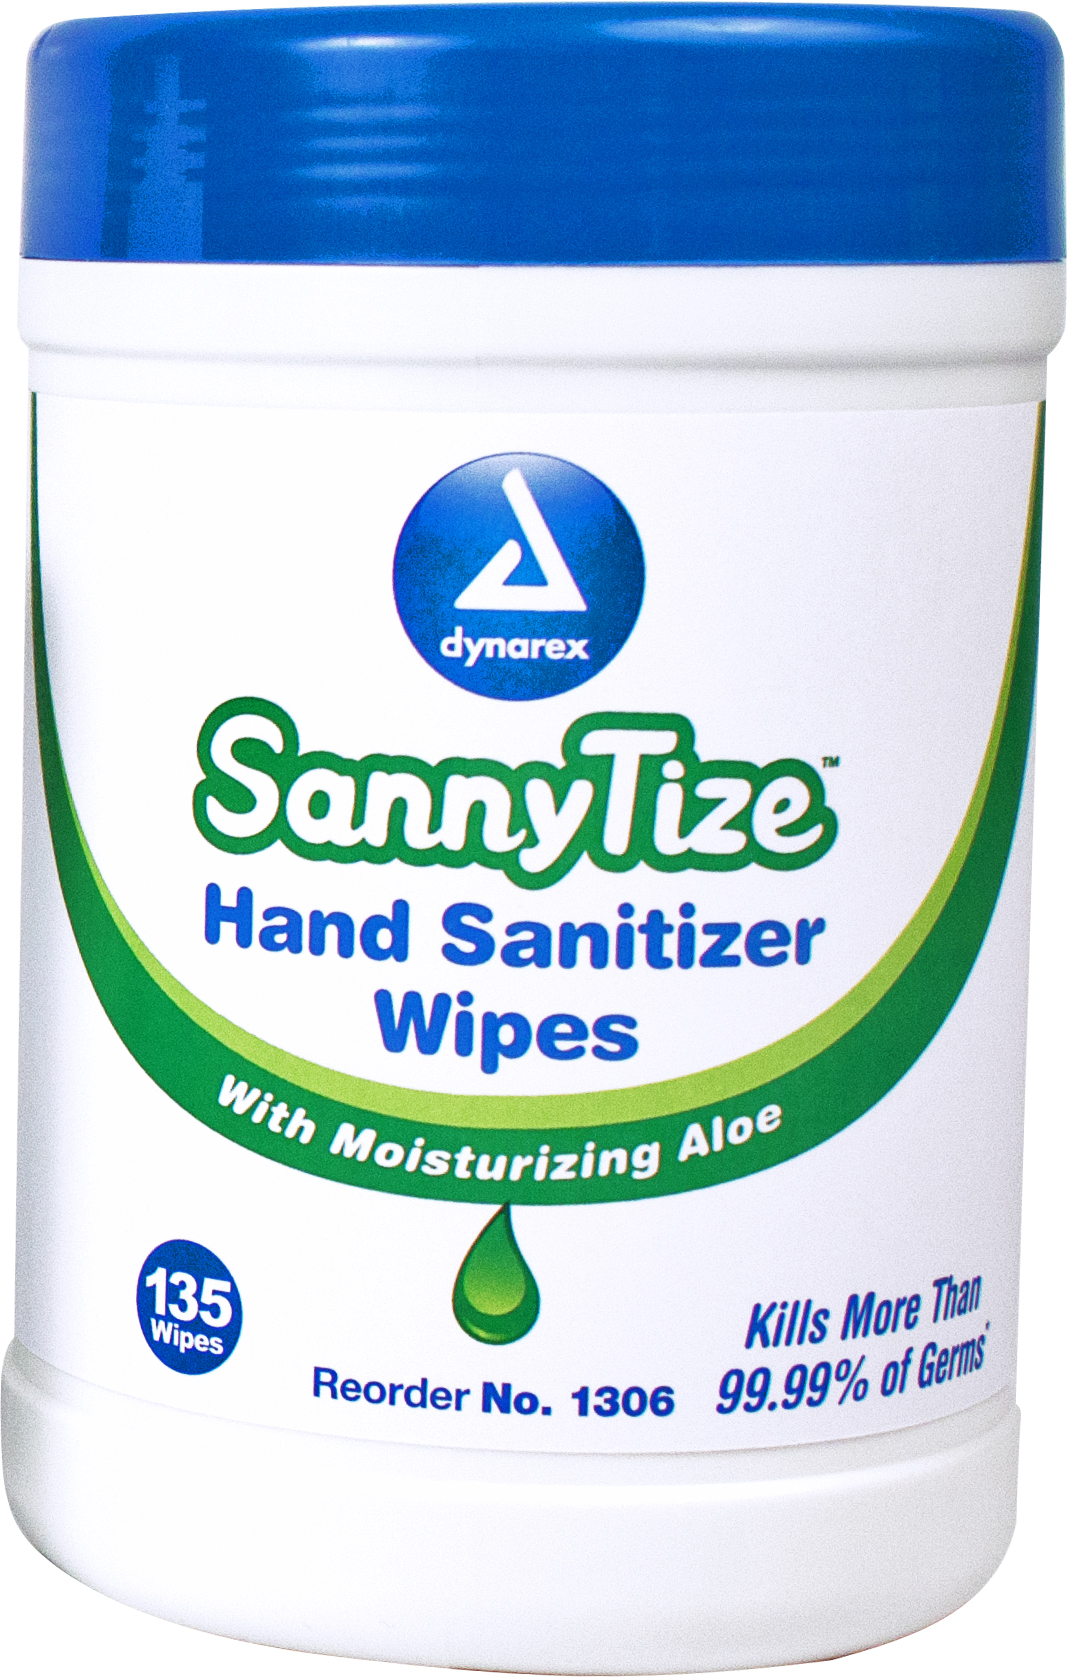 1306 Dynarex Sannytize即时洗手液弹罐擦手液中含有70%的酒精